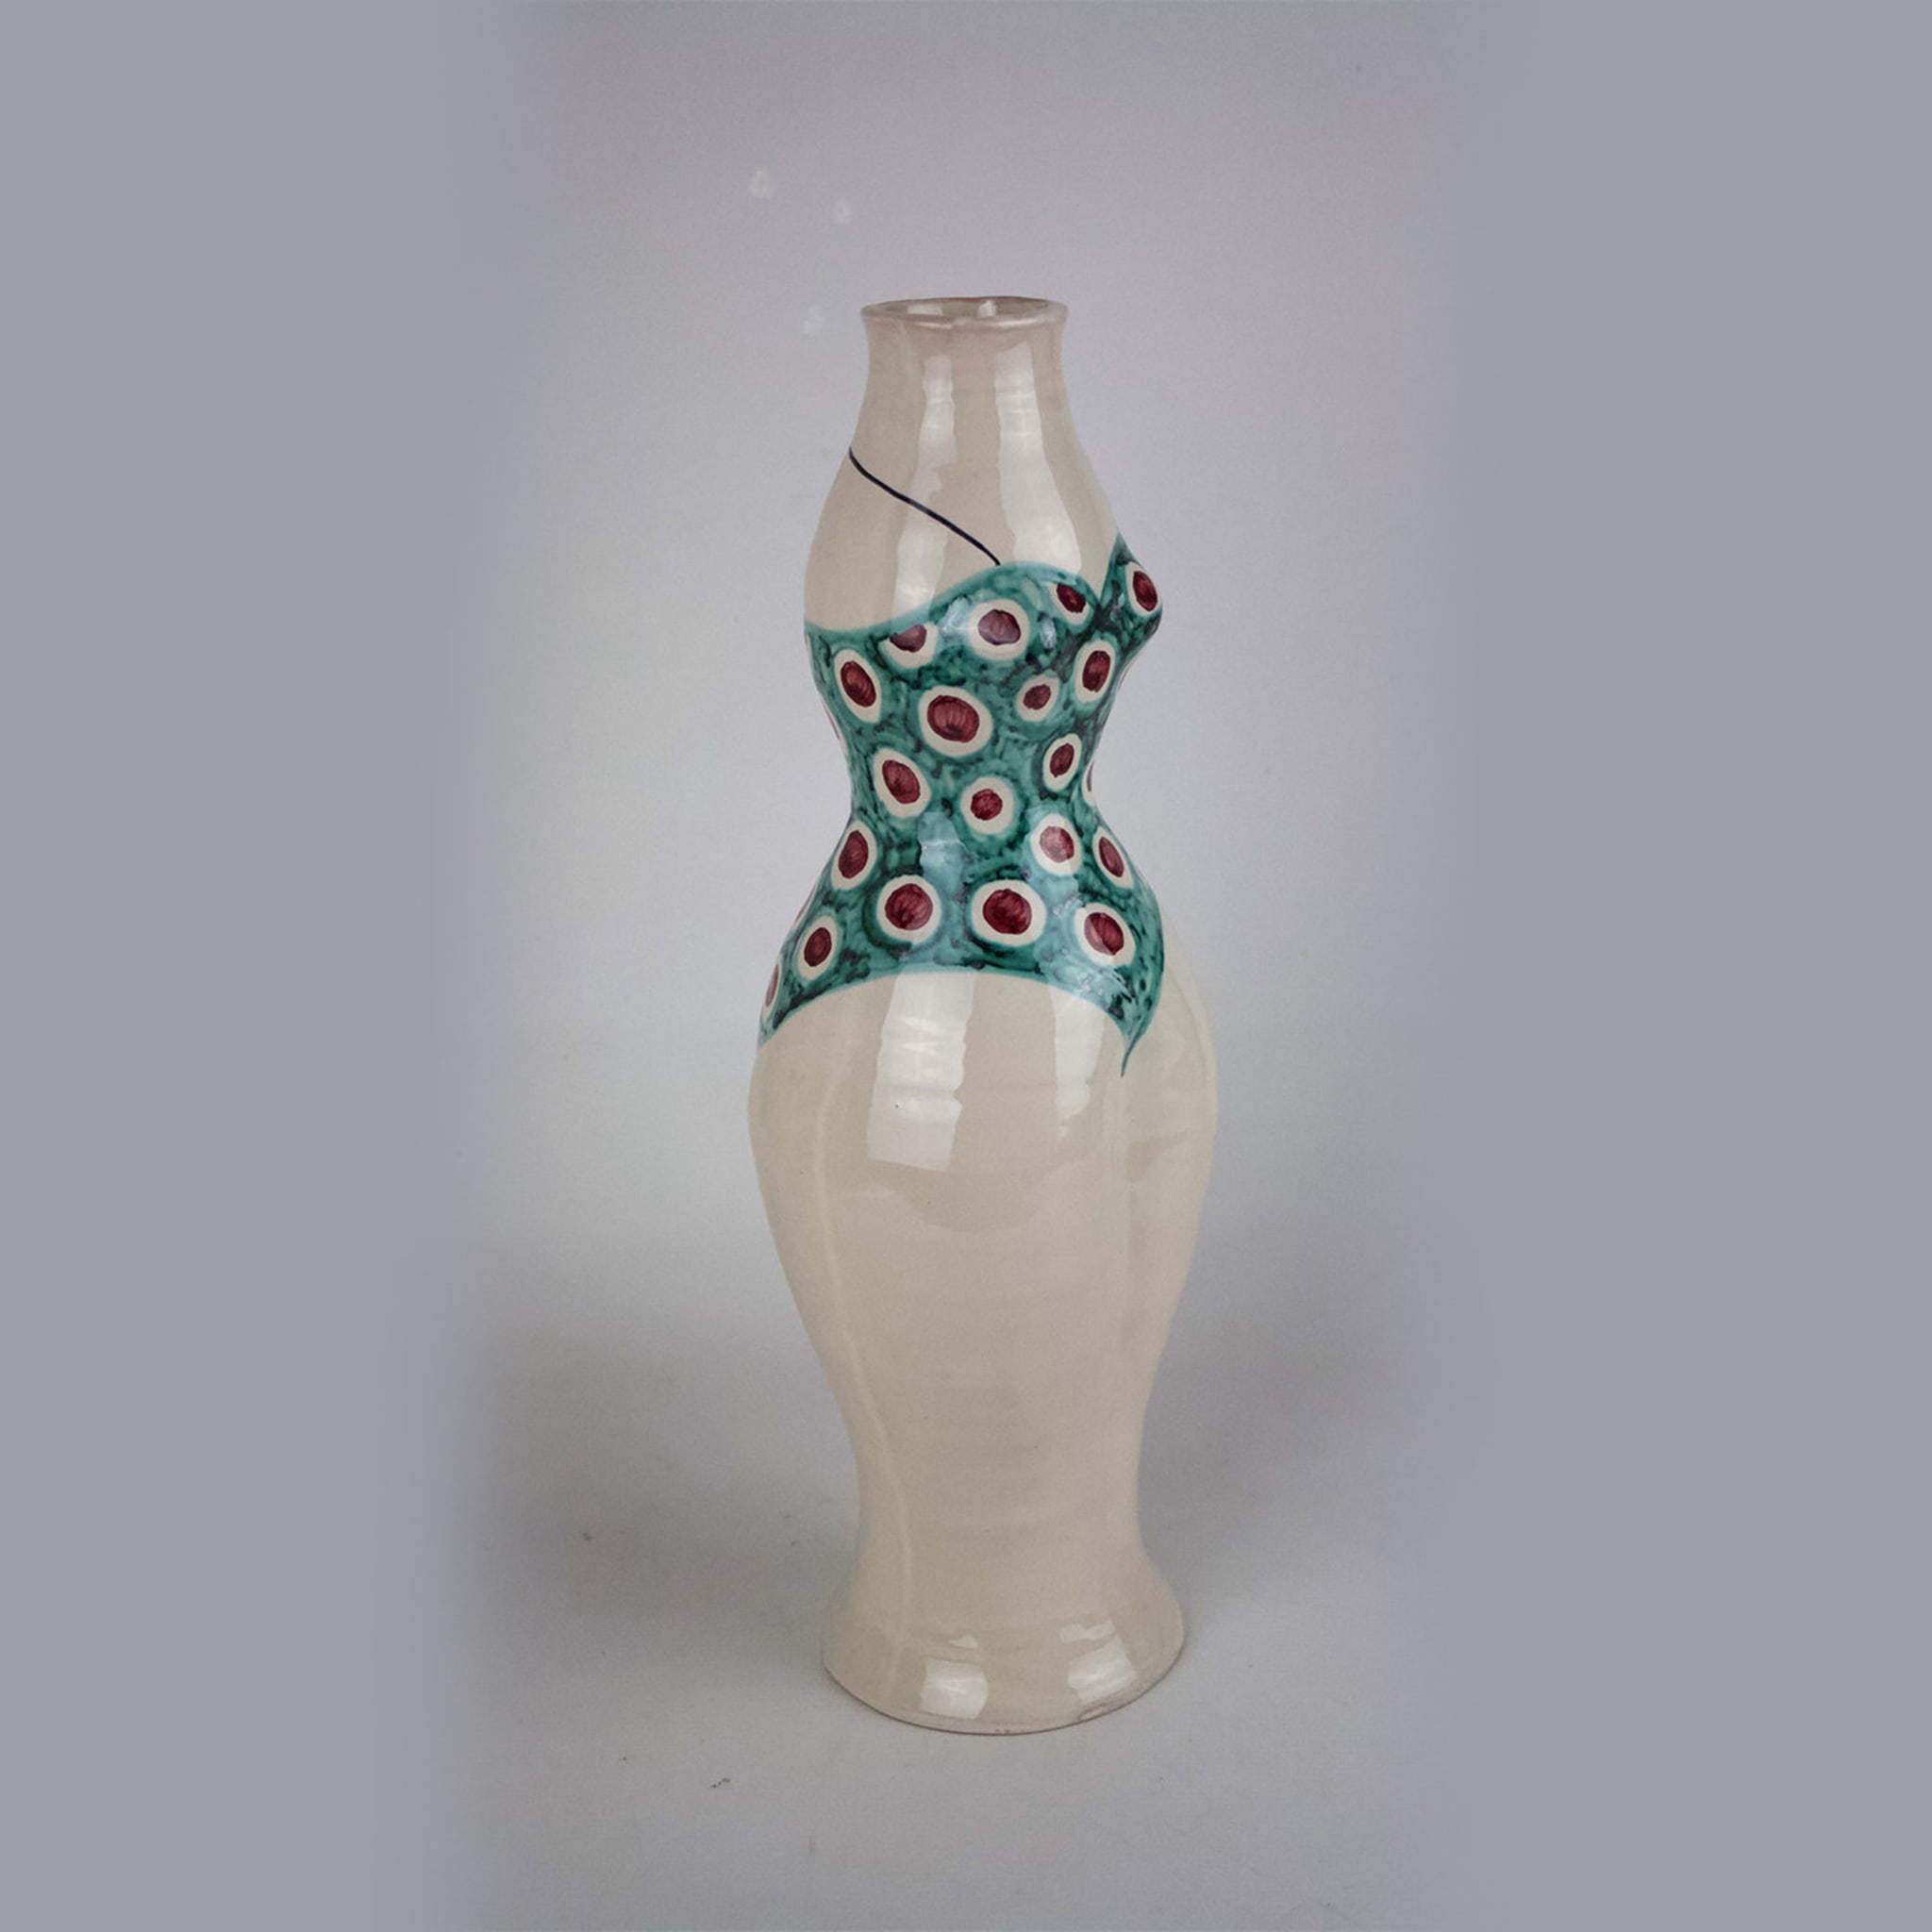 Ceramic Polka Dot Bathing Suit Sculpture Vase  - Alternative view 1